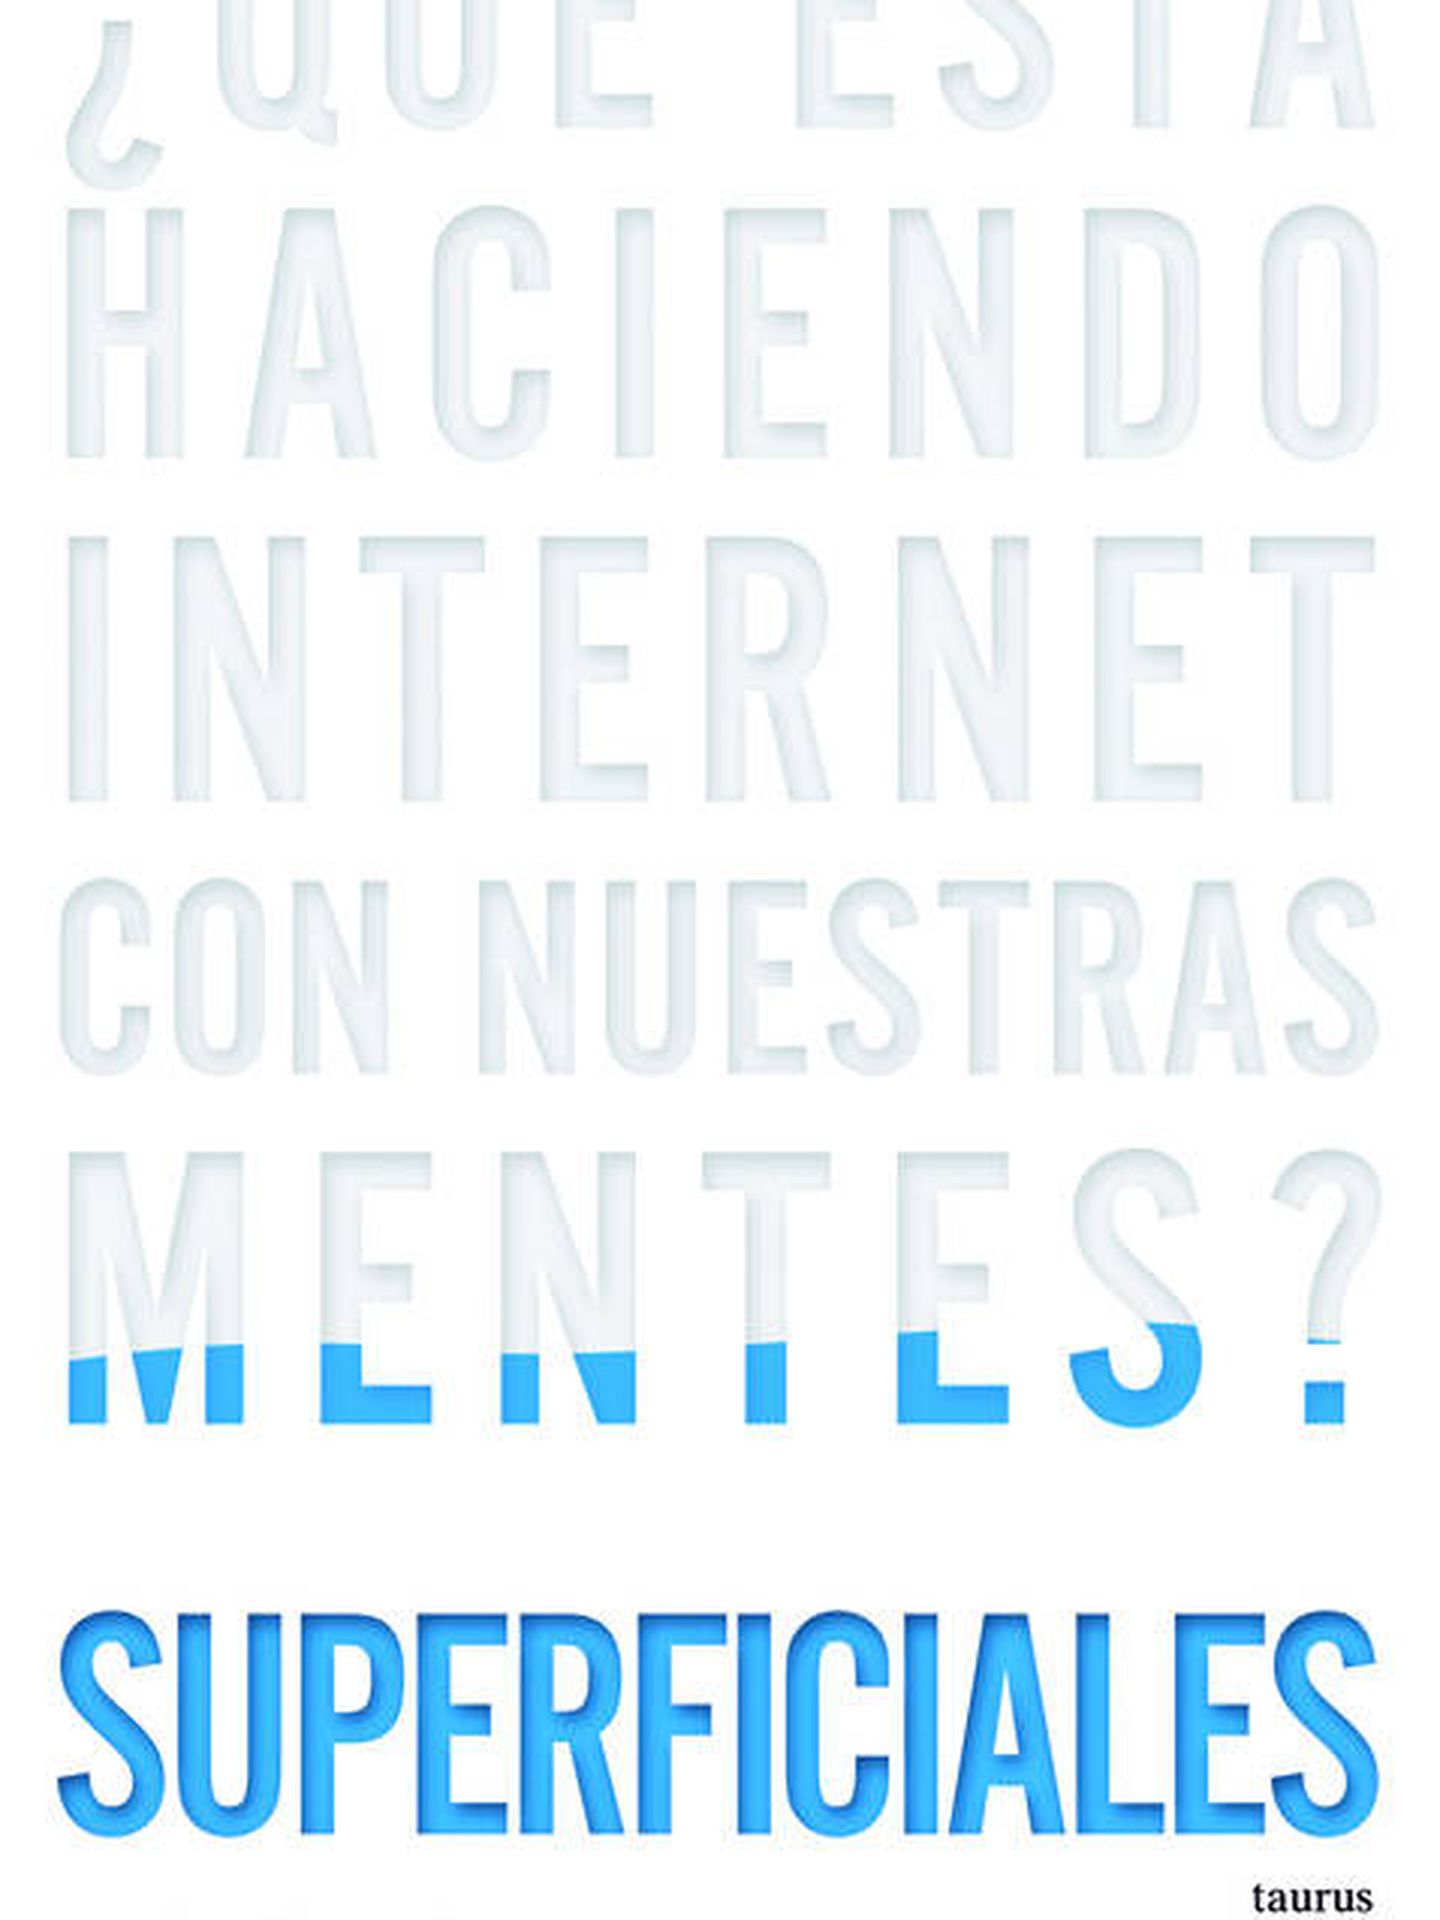 'Superficiales'.